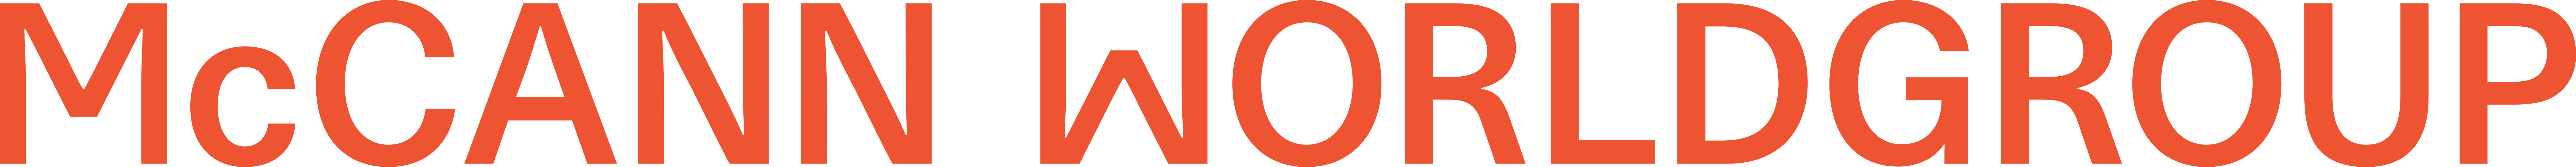 mccann-worldgroup-logo-on